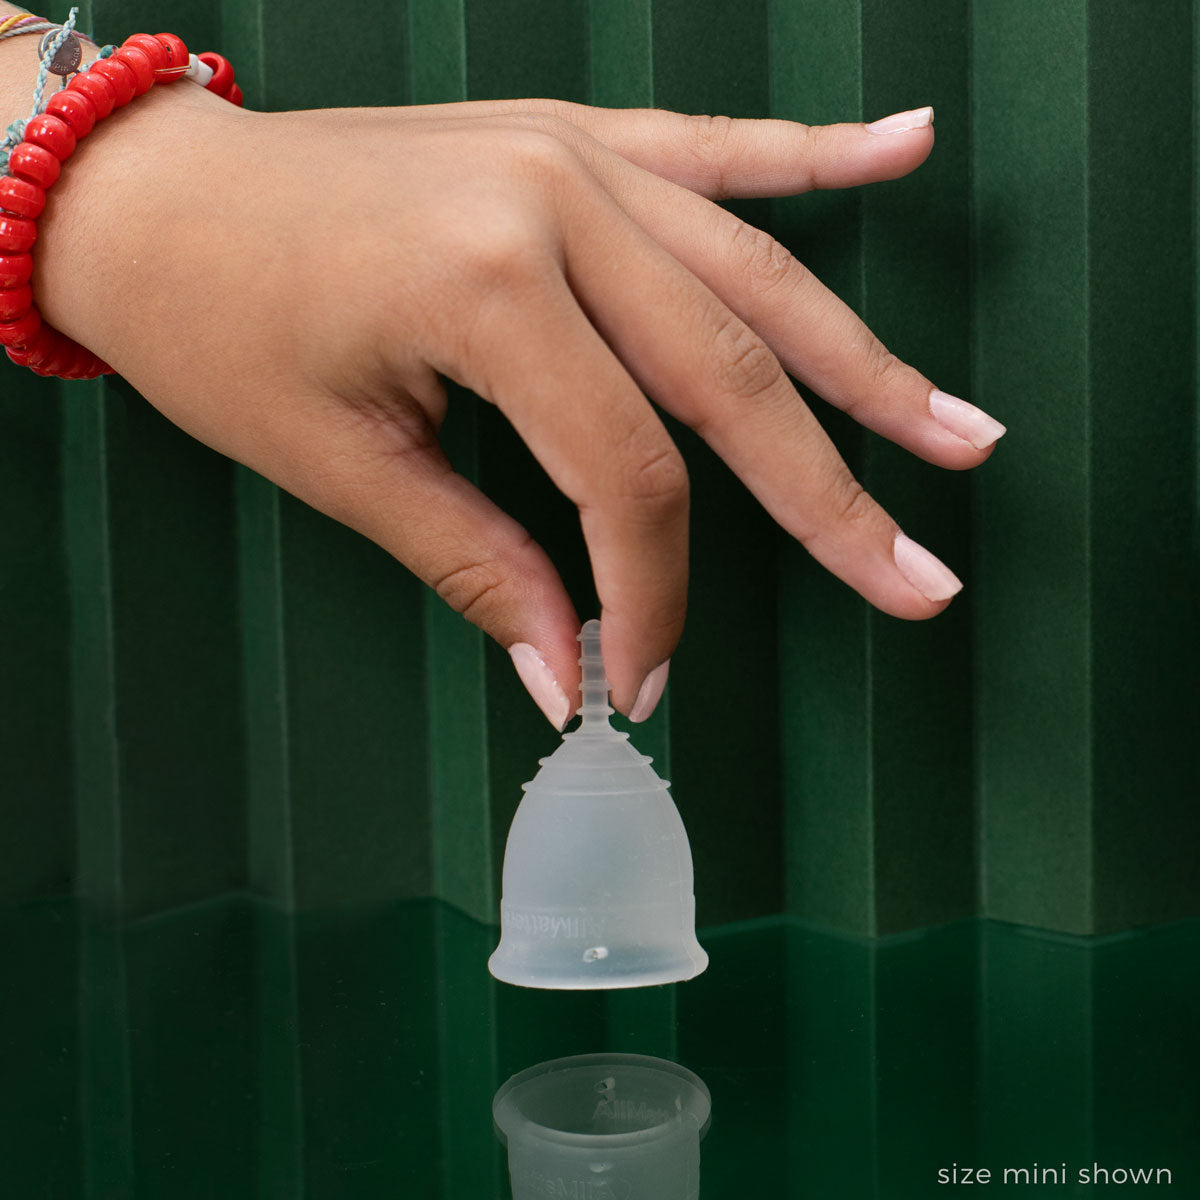 AllMatters Mini Reusable Menstrual Cup